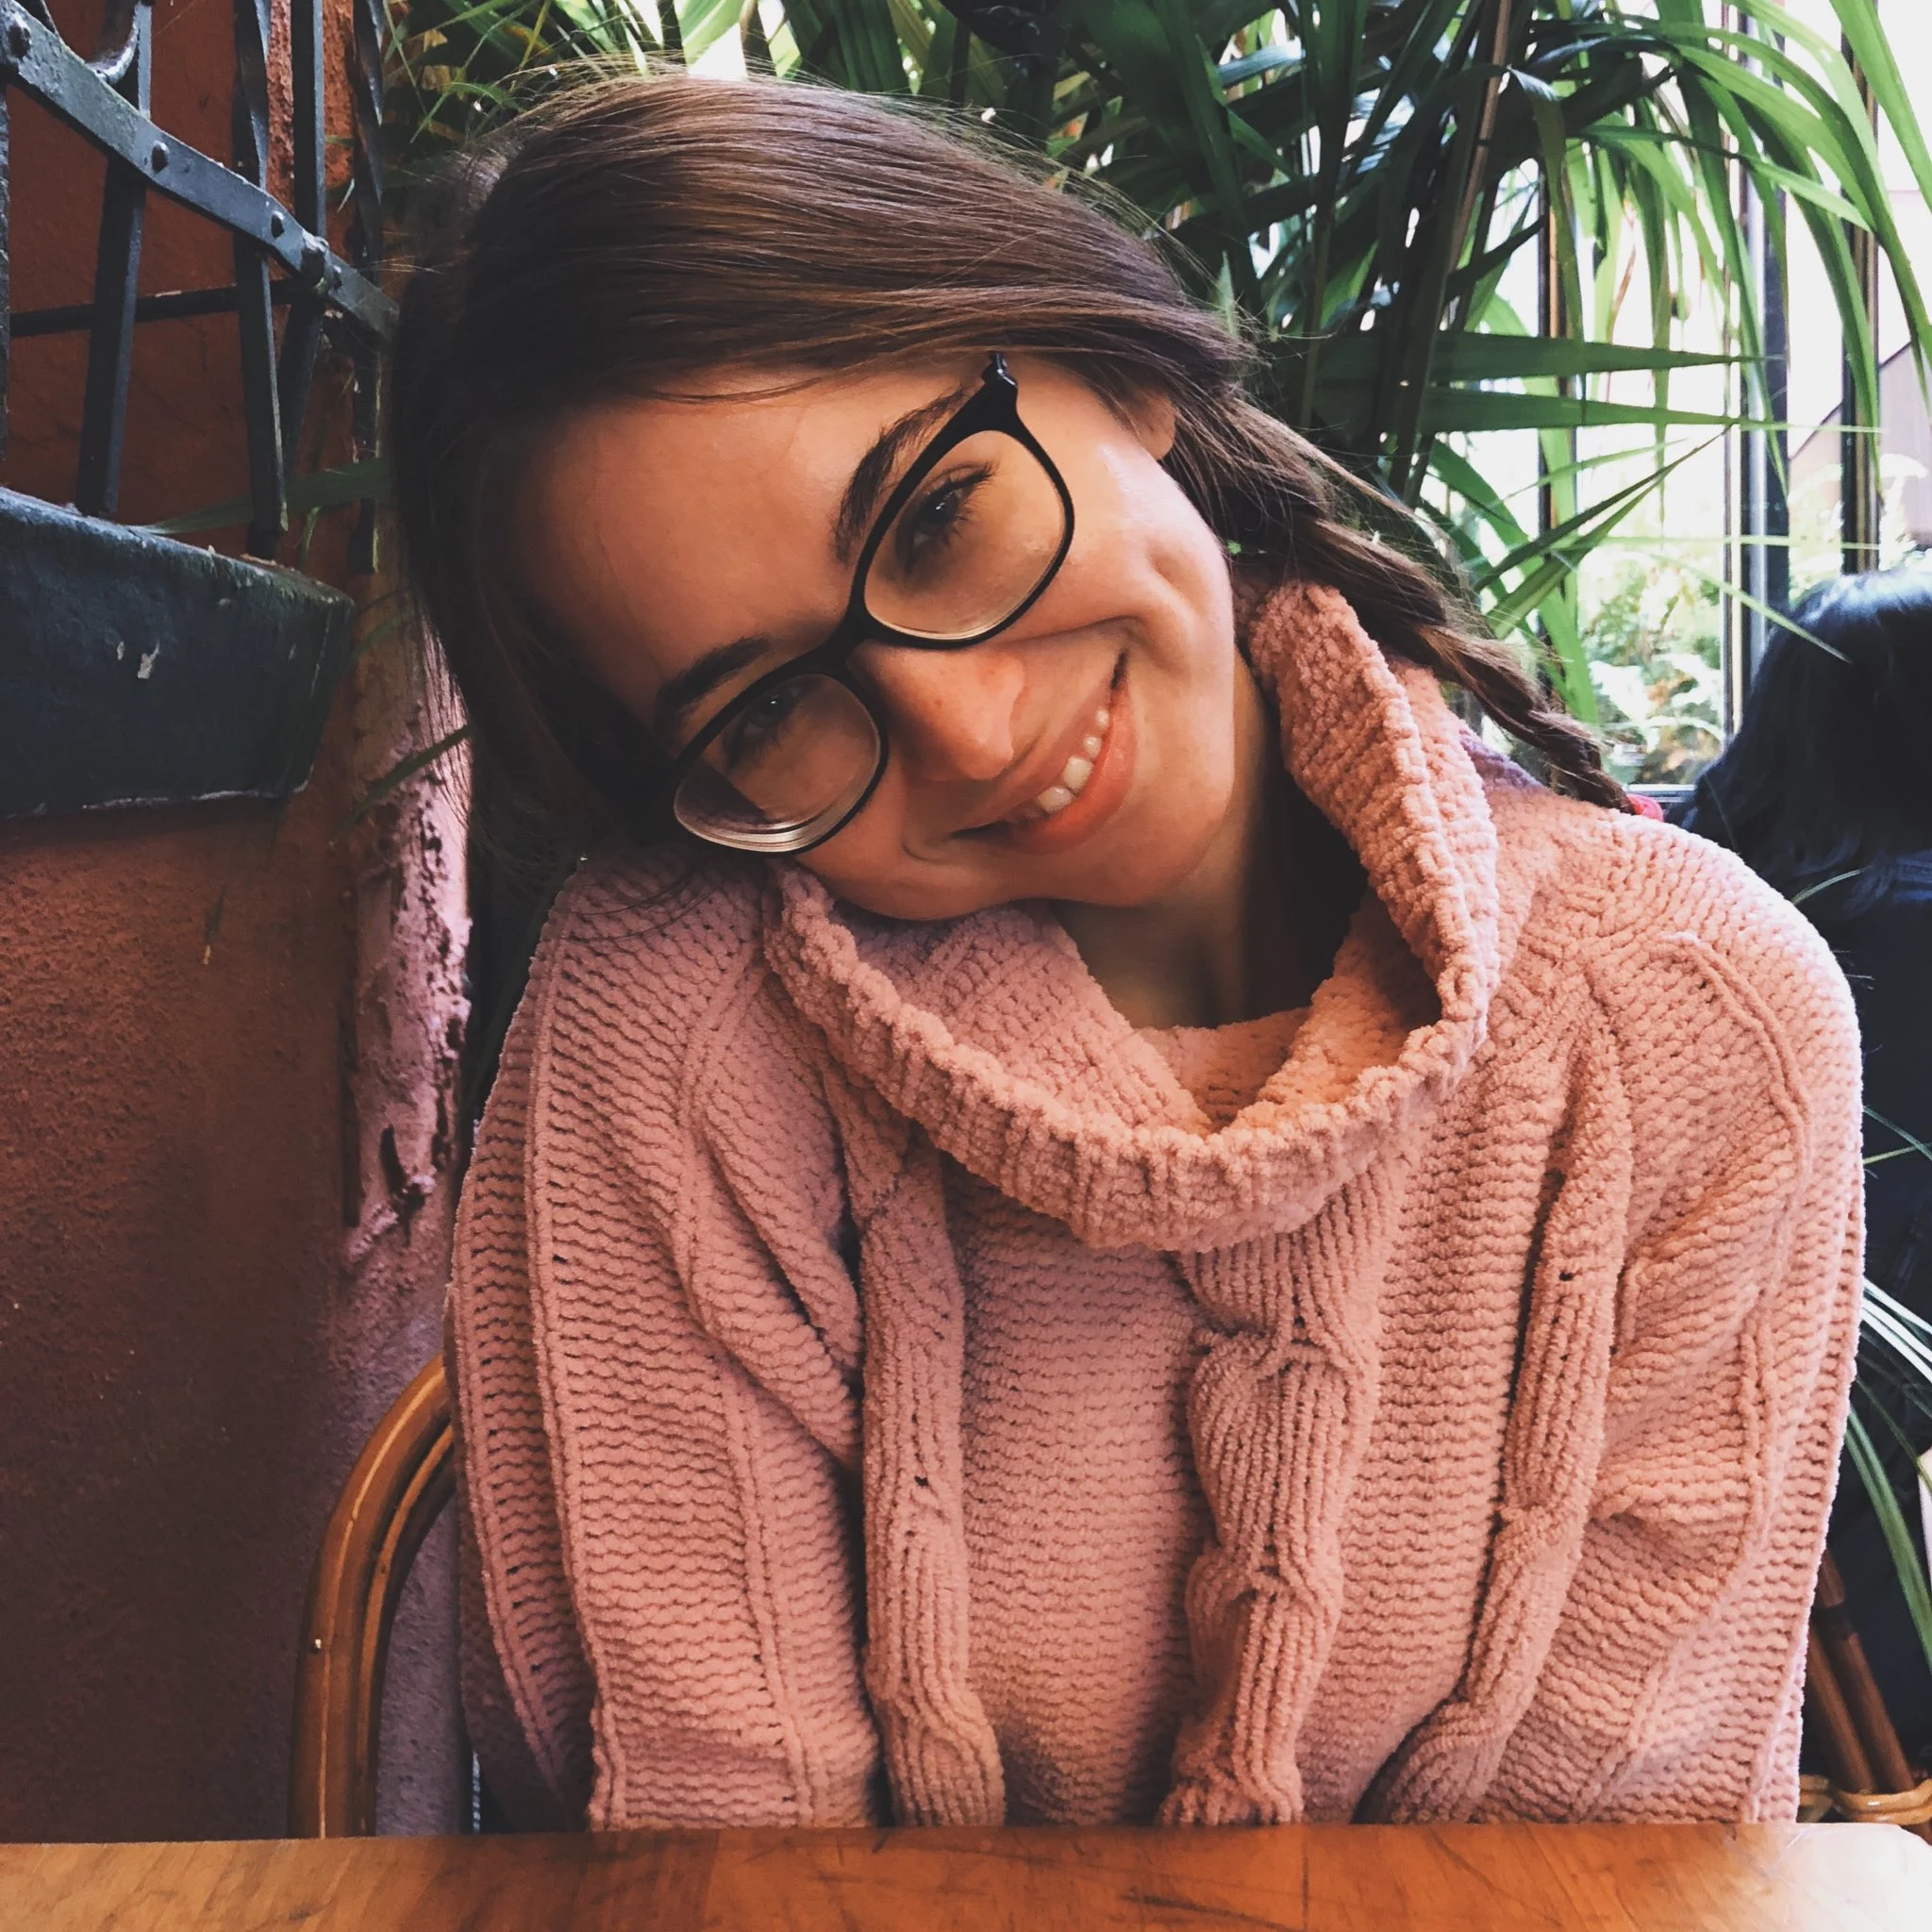 (@rileyreidx3) beautiful riley looks so nerdy type in her glasses 